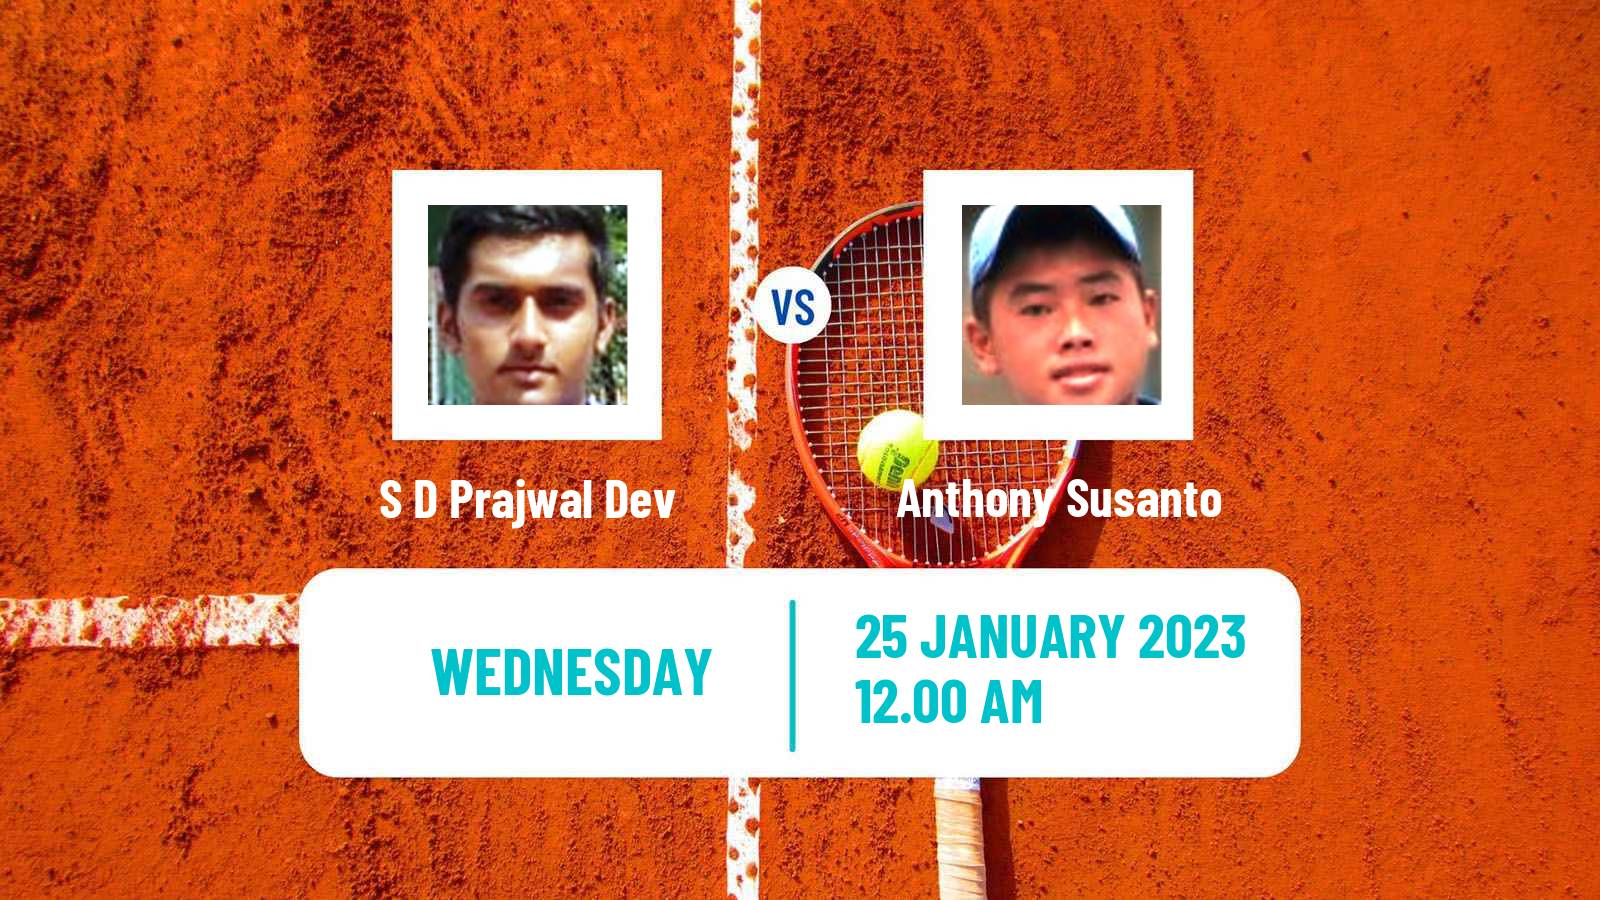 Tennis ITF Tournaments S D Prajwal Dev - Anthony Susanto